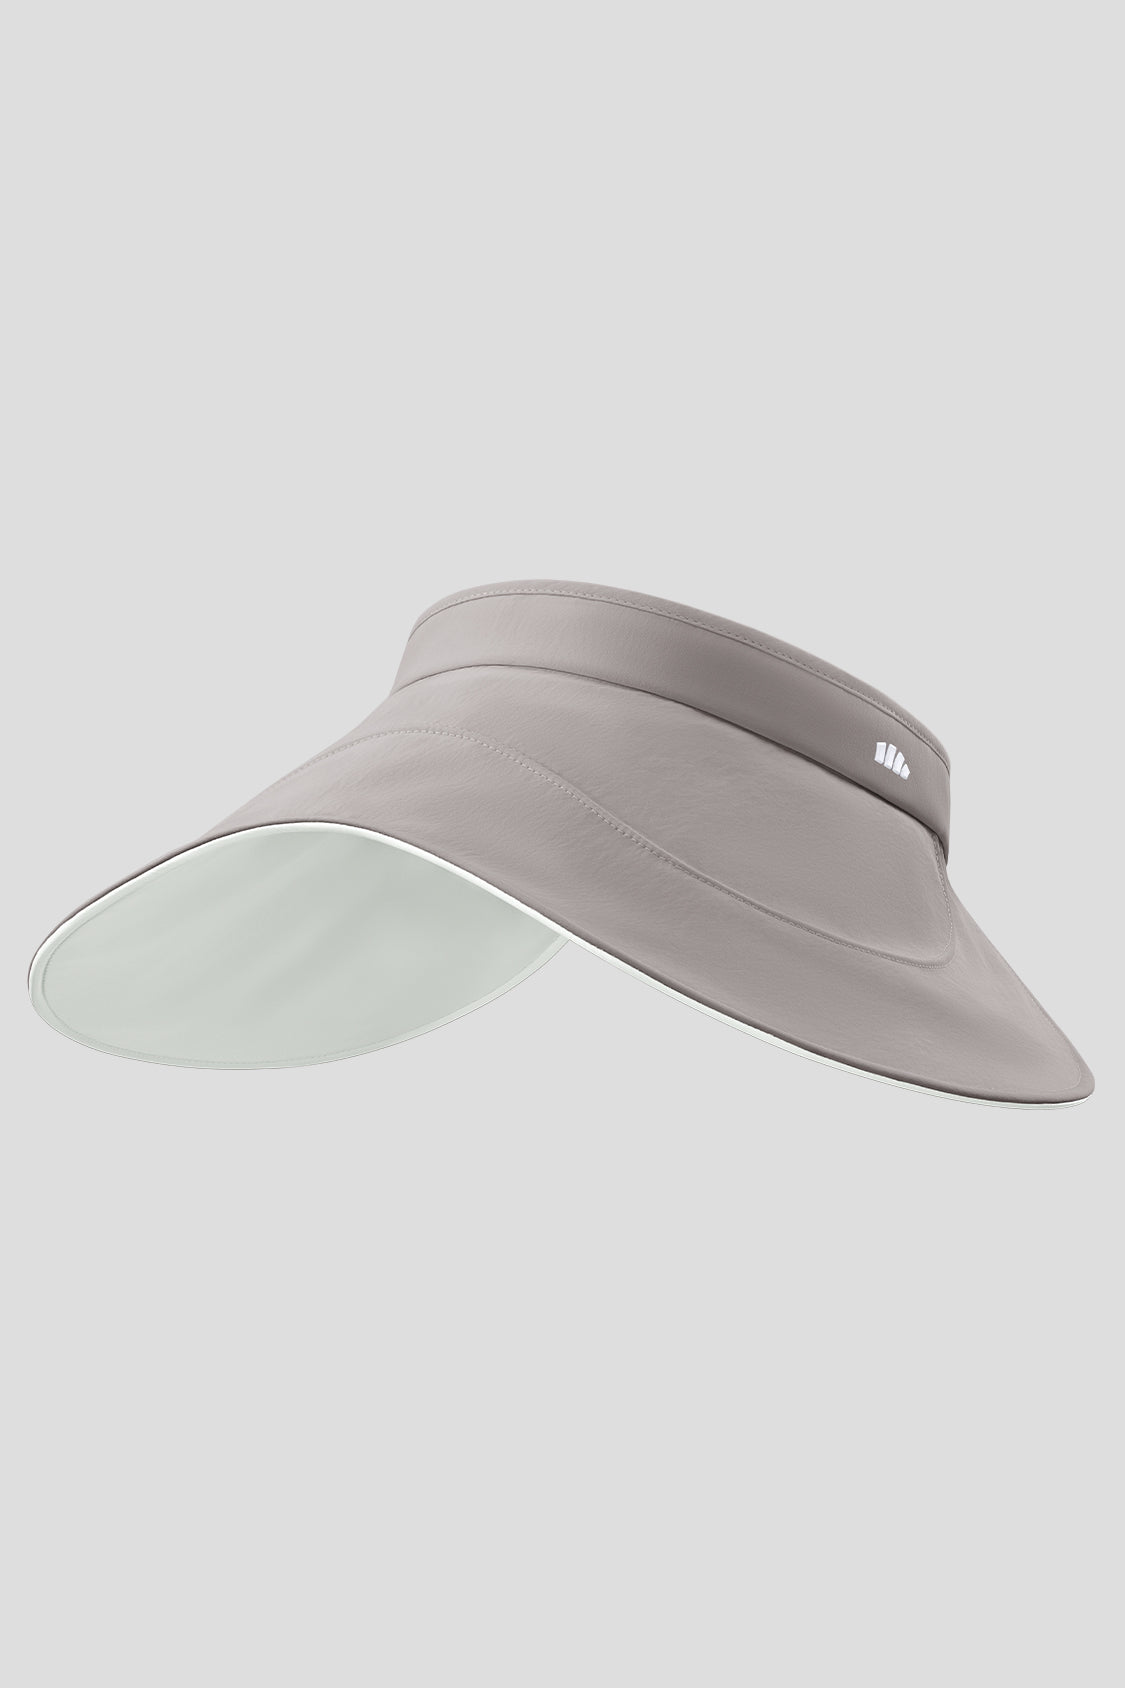 Sun Hat for Women, Beneunder UPF50+ Packable Wide Brim UV Protection Sun Visor Hat Black / One Size - Adjustable